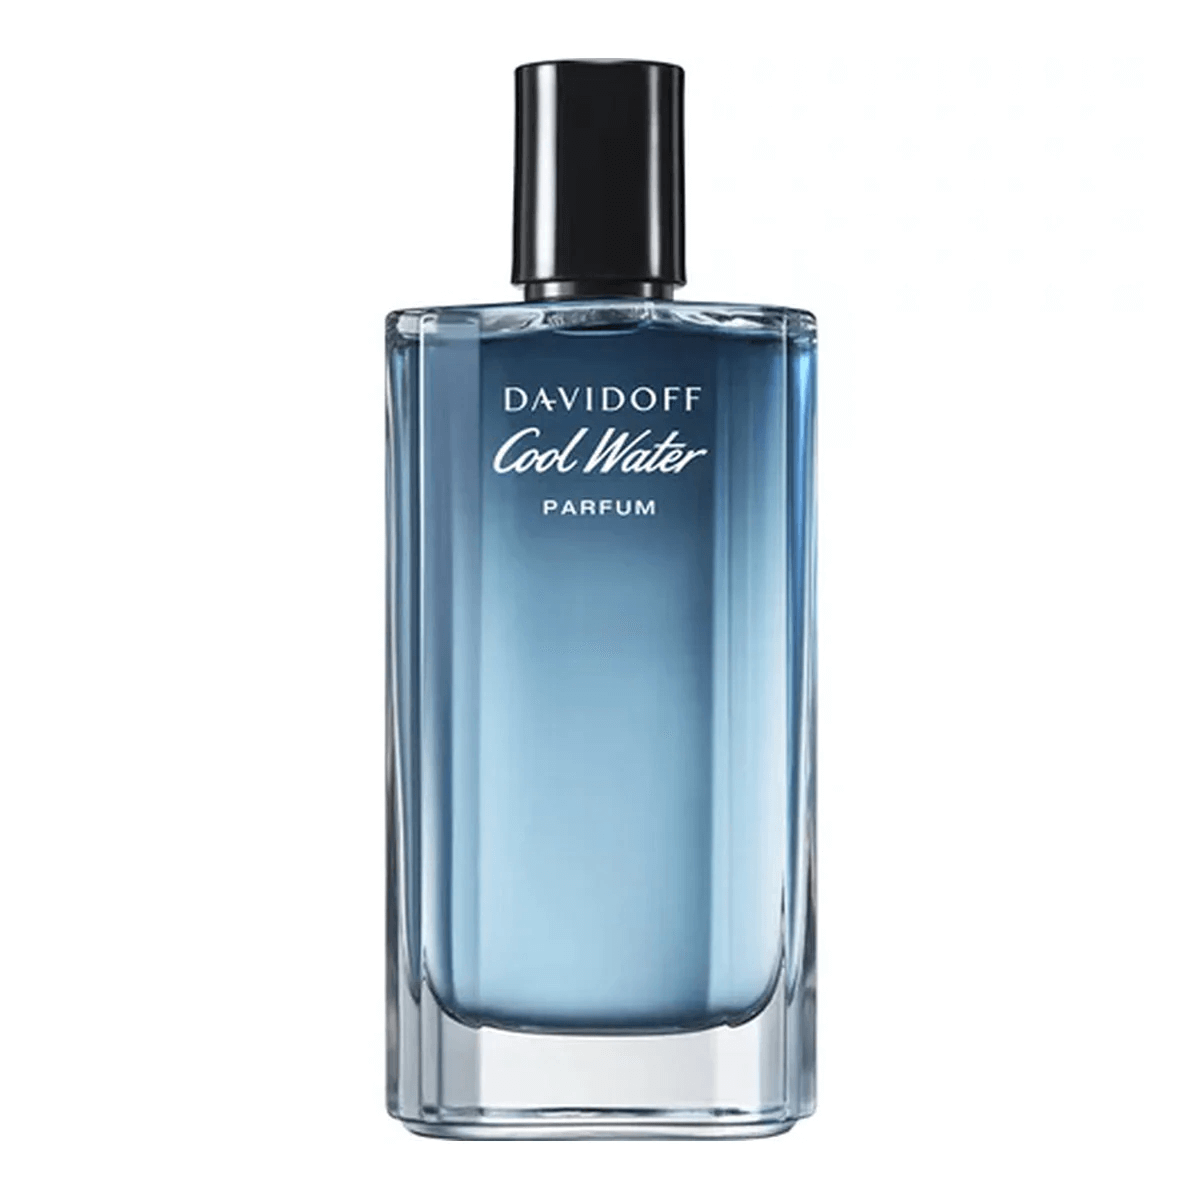 shop Davidoff Cool Water Man Parfum Online in Pakistan - ColorshowPk 